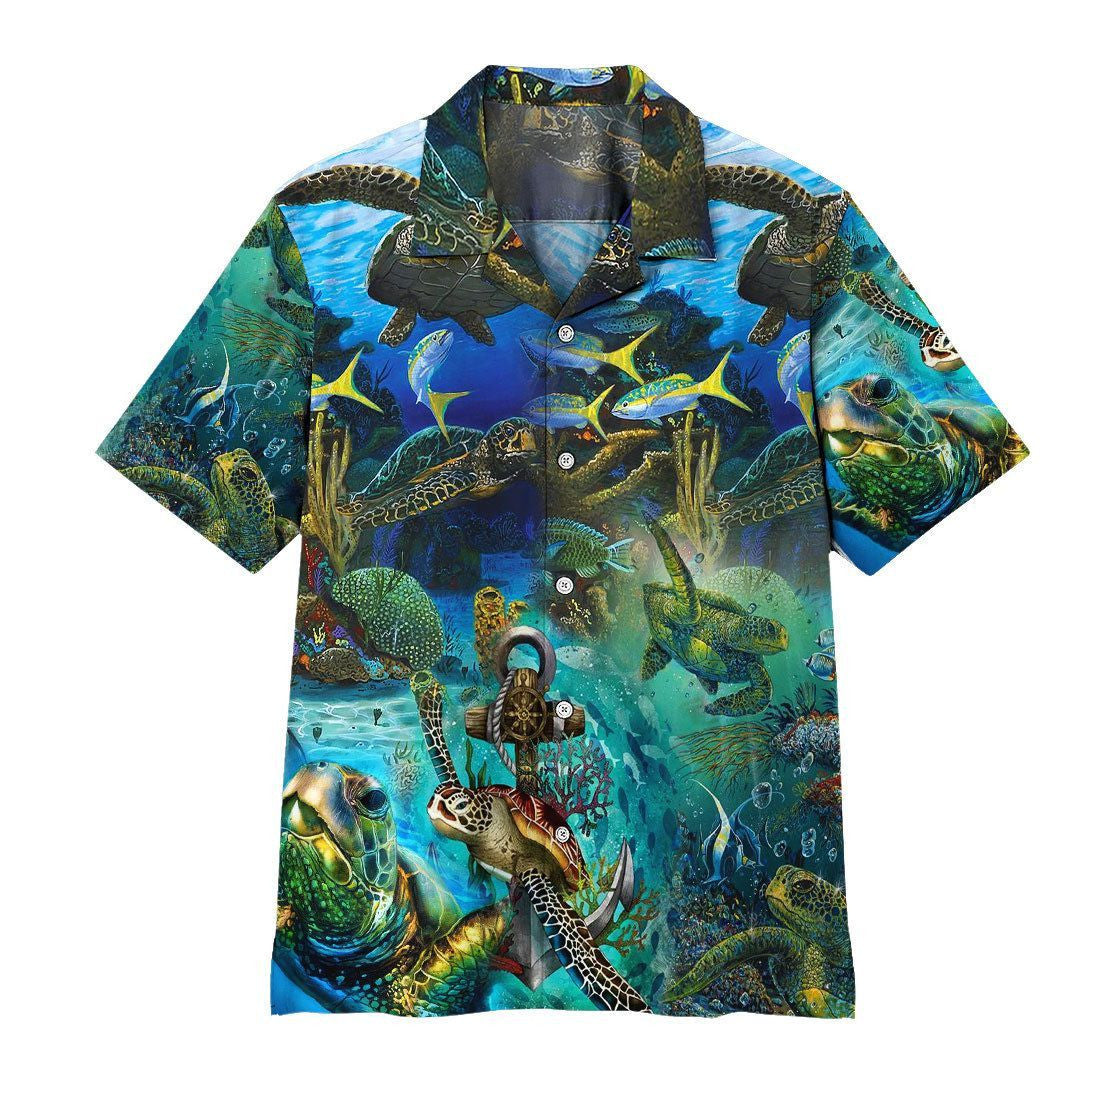 Gearhuman 3D Turtles Hawaiian Shirt, Aloha Shirt For Summer